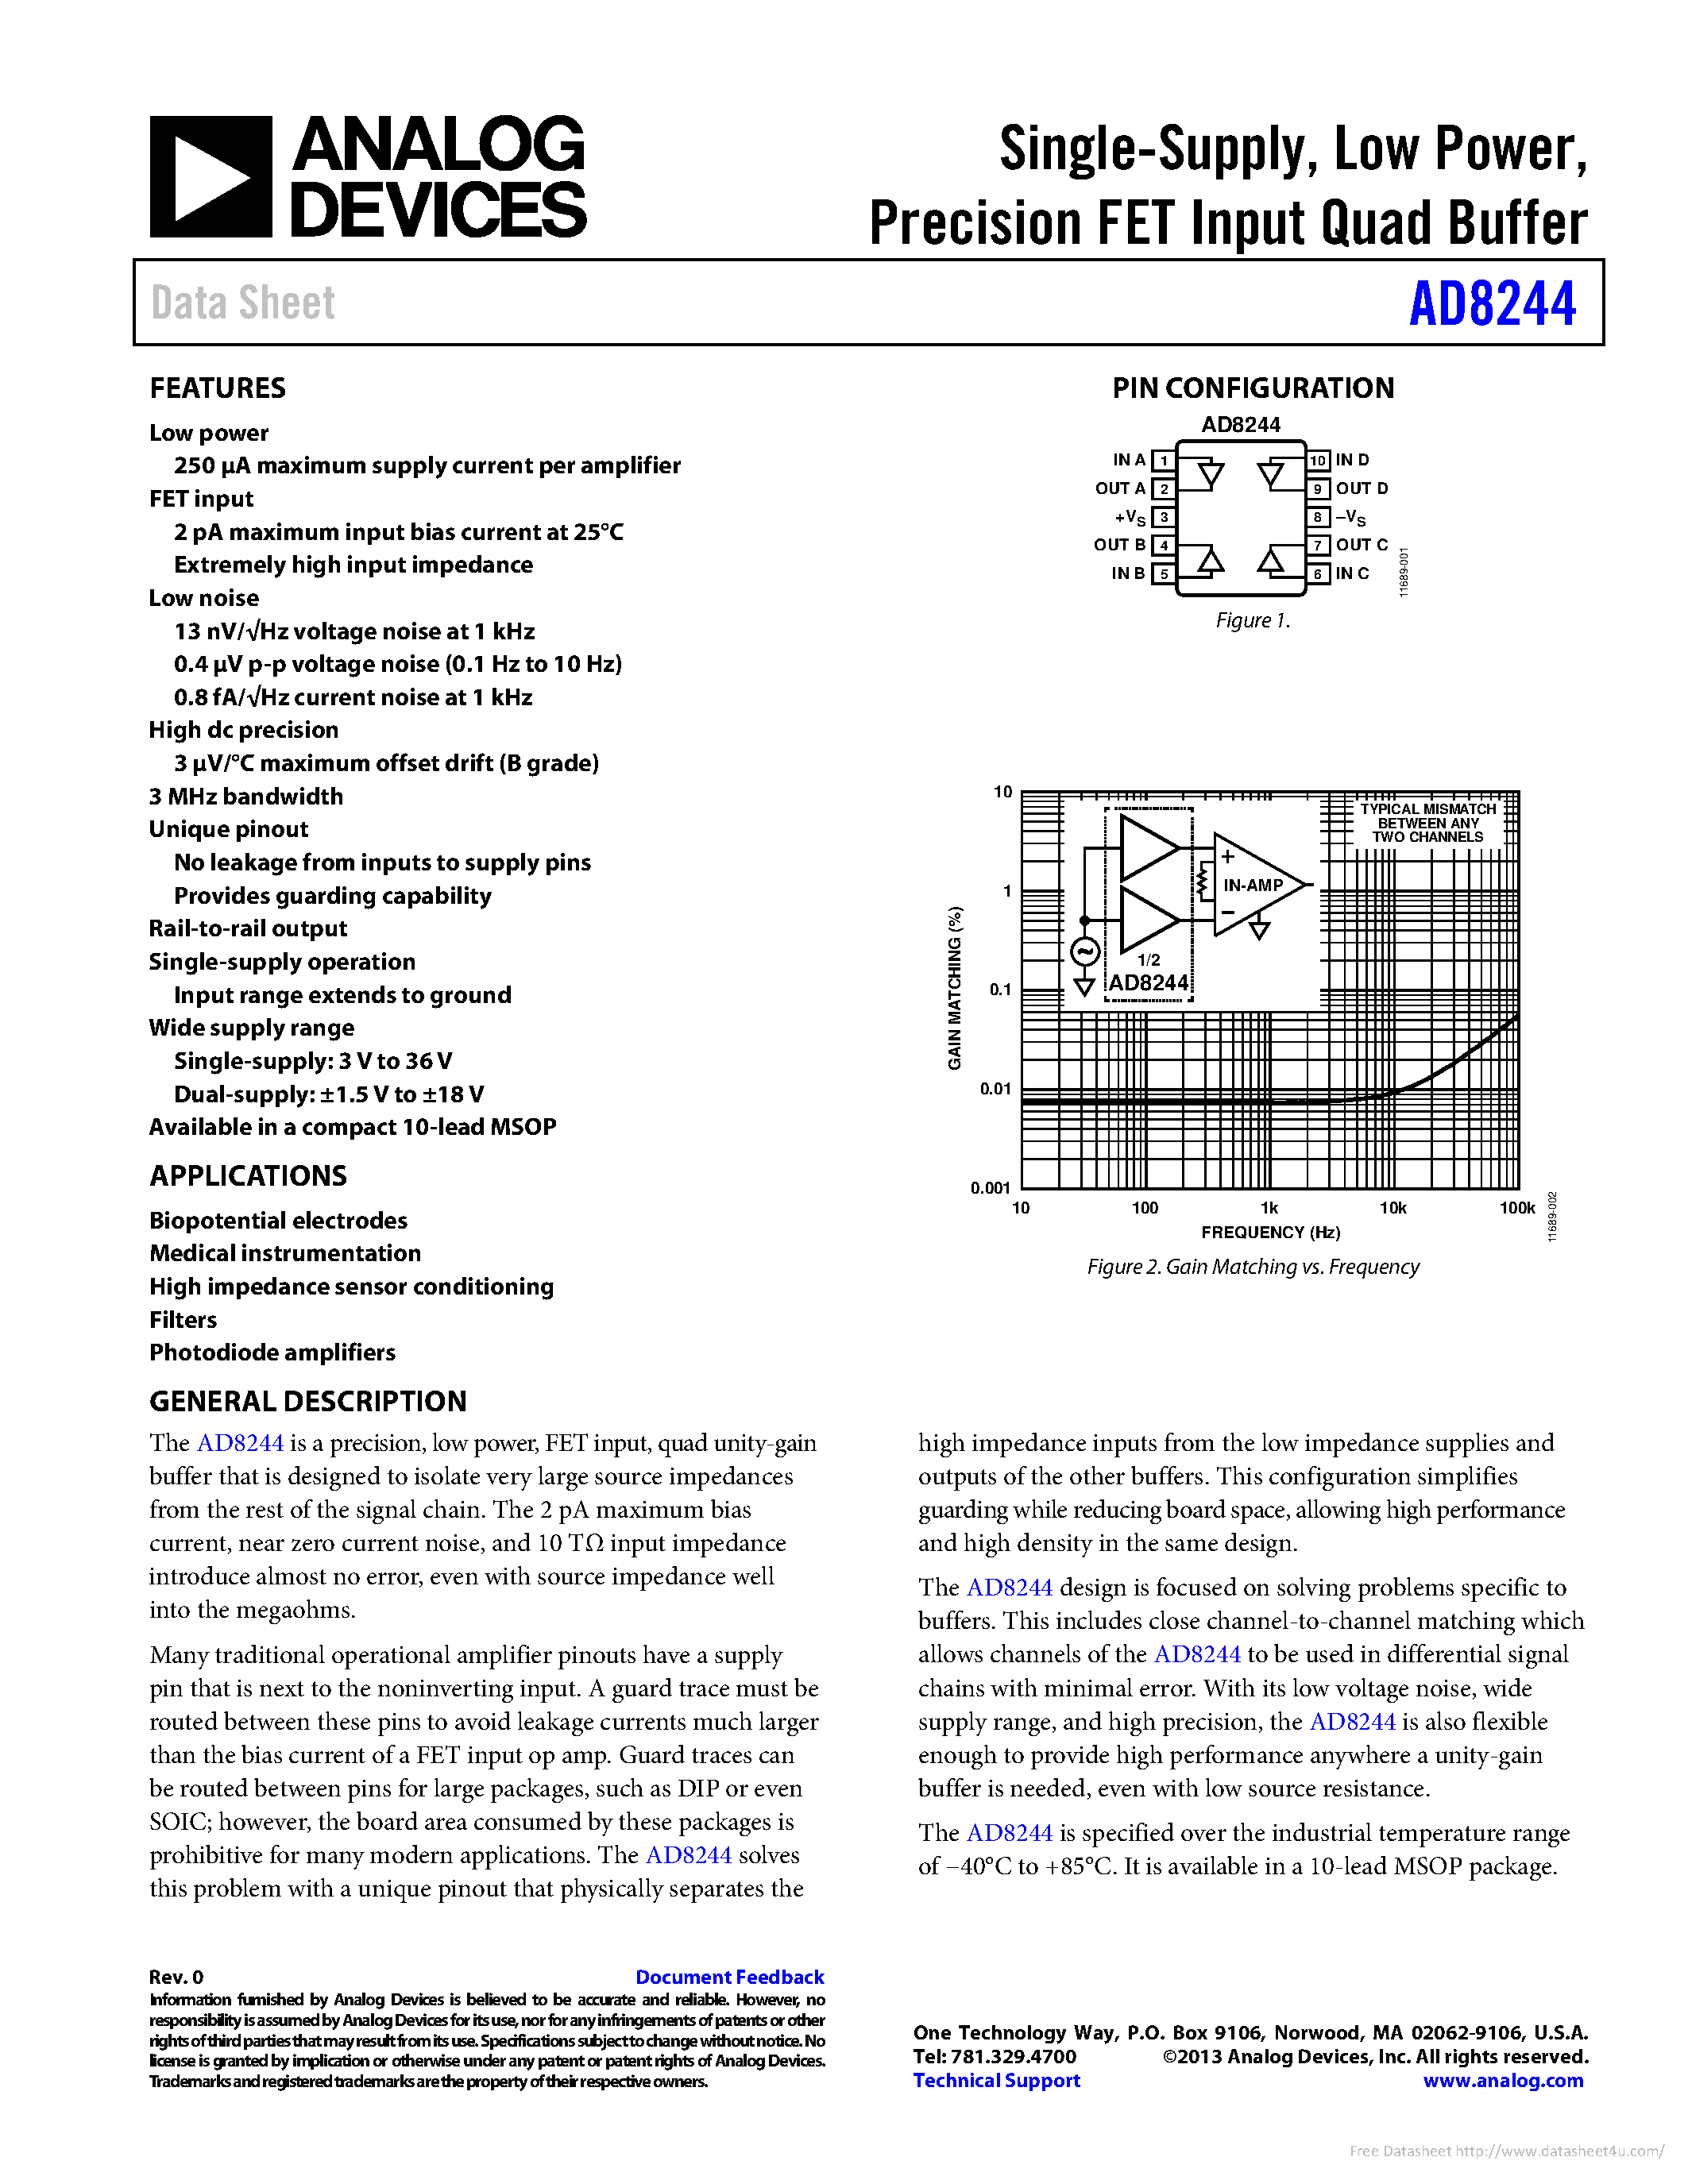 Datasheet AD8244 - page 1